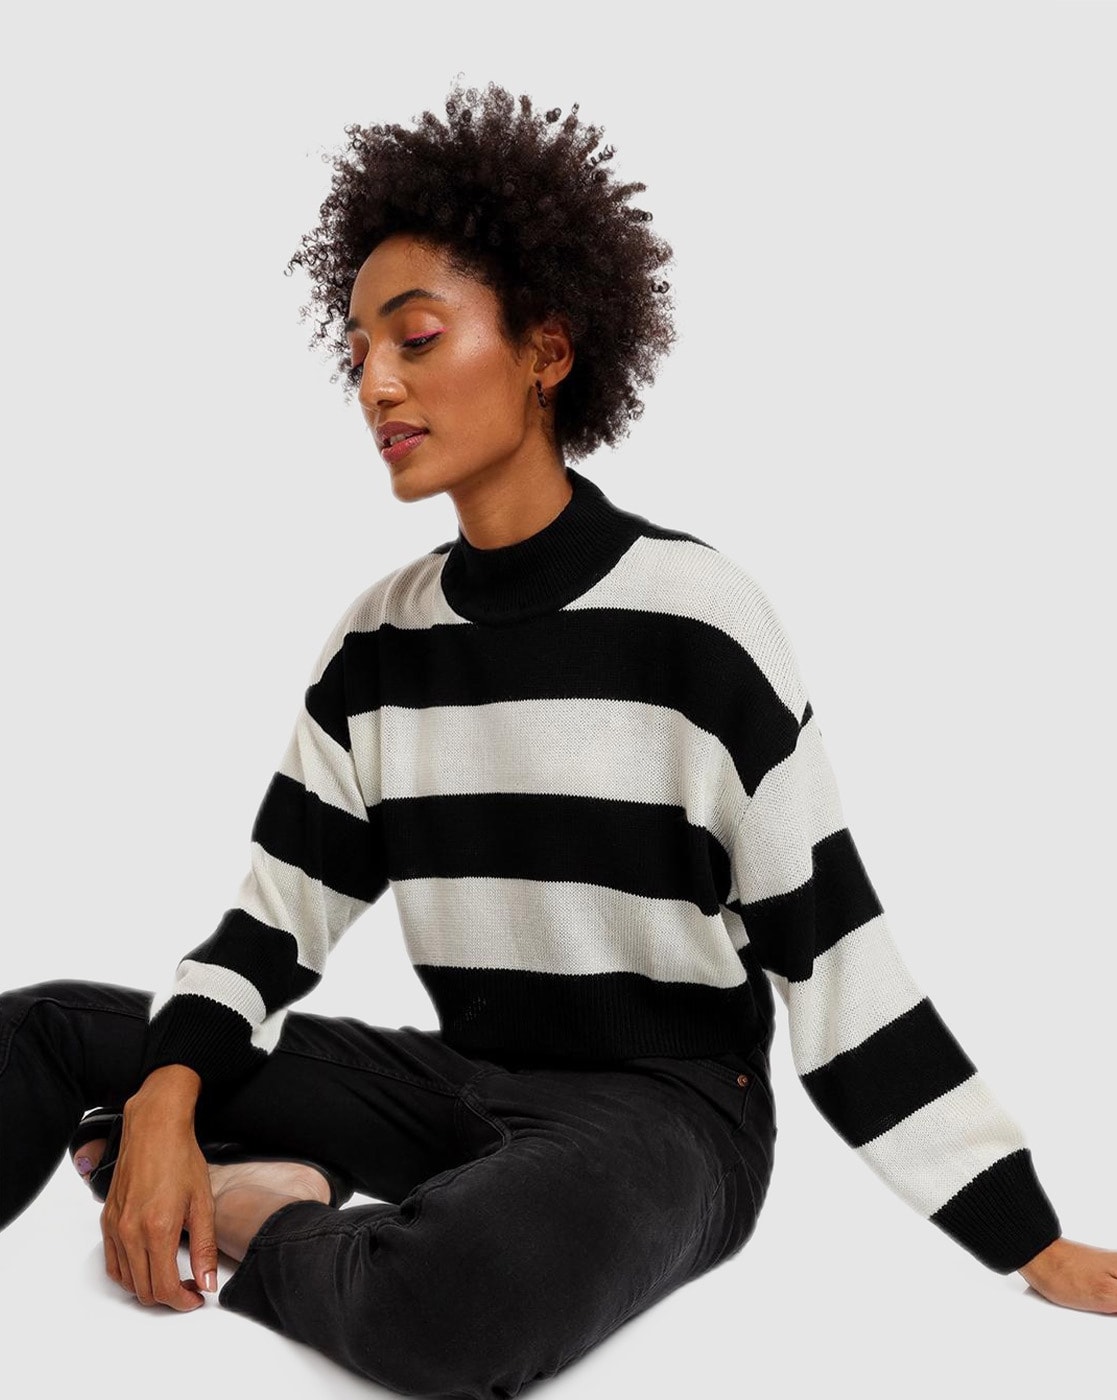 Fantaslook Striped Sweater Women Crewneck Oversized Pullover